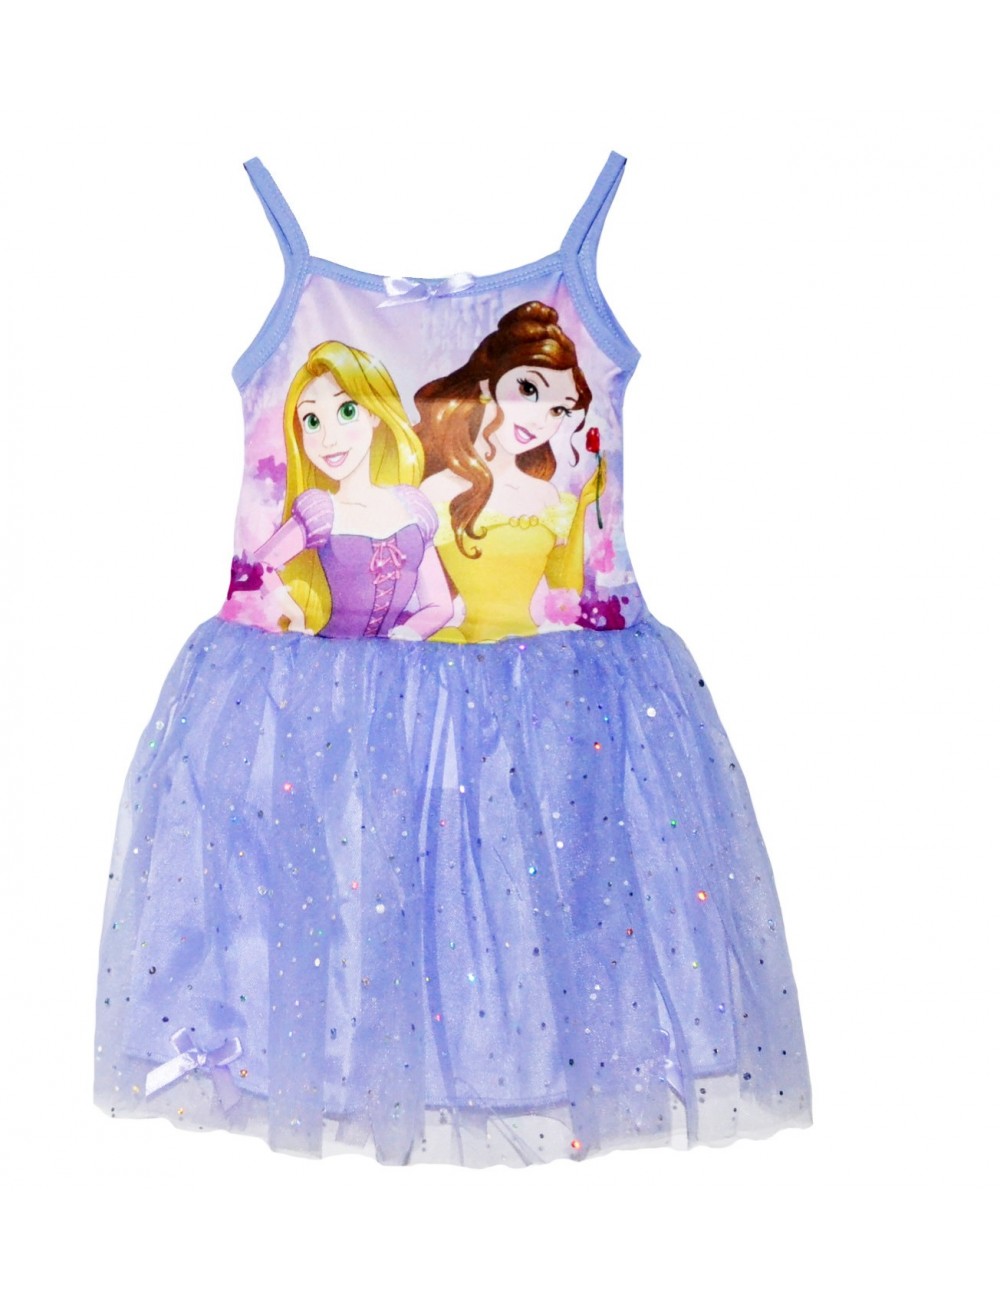 Rochie tutu, mov, Printesele Disney: Belle si Rapunzel, copii 3-6 ani